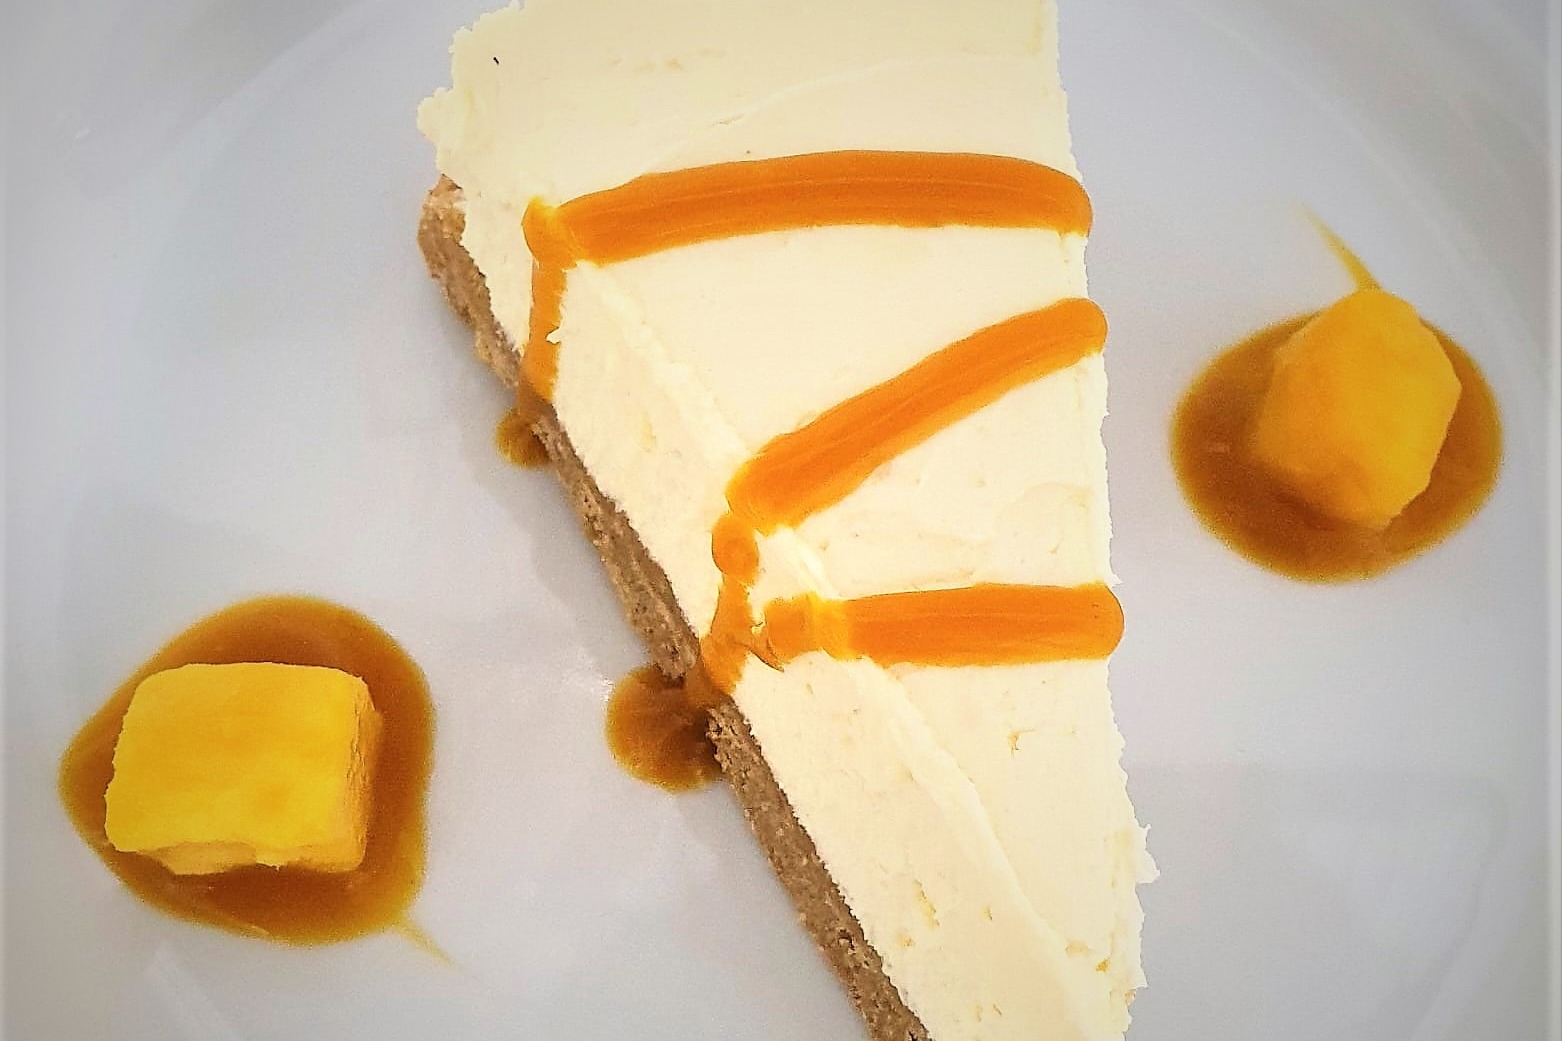 Homemade vanilla cheesecake with mango coulis